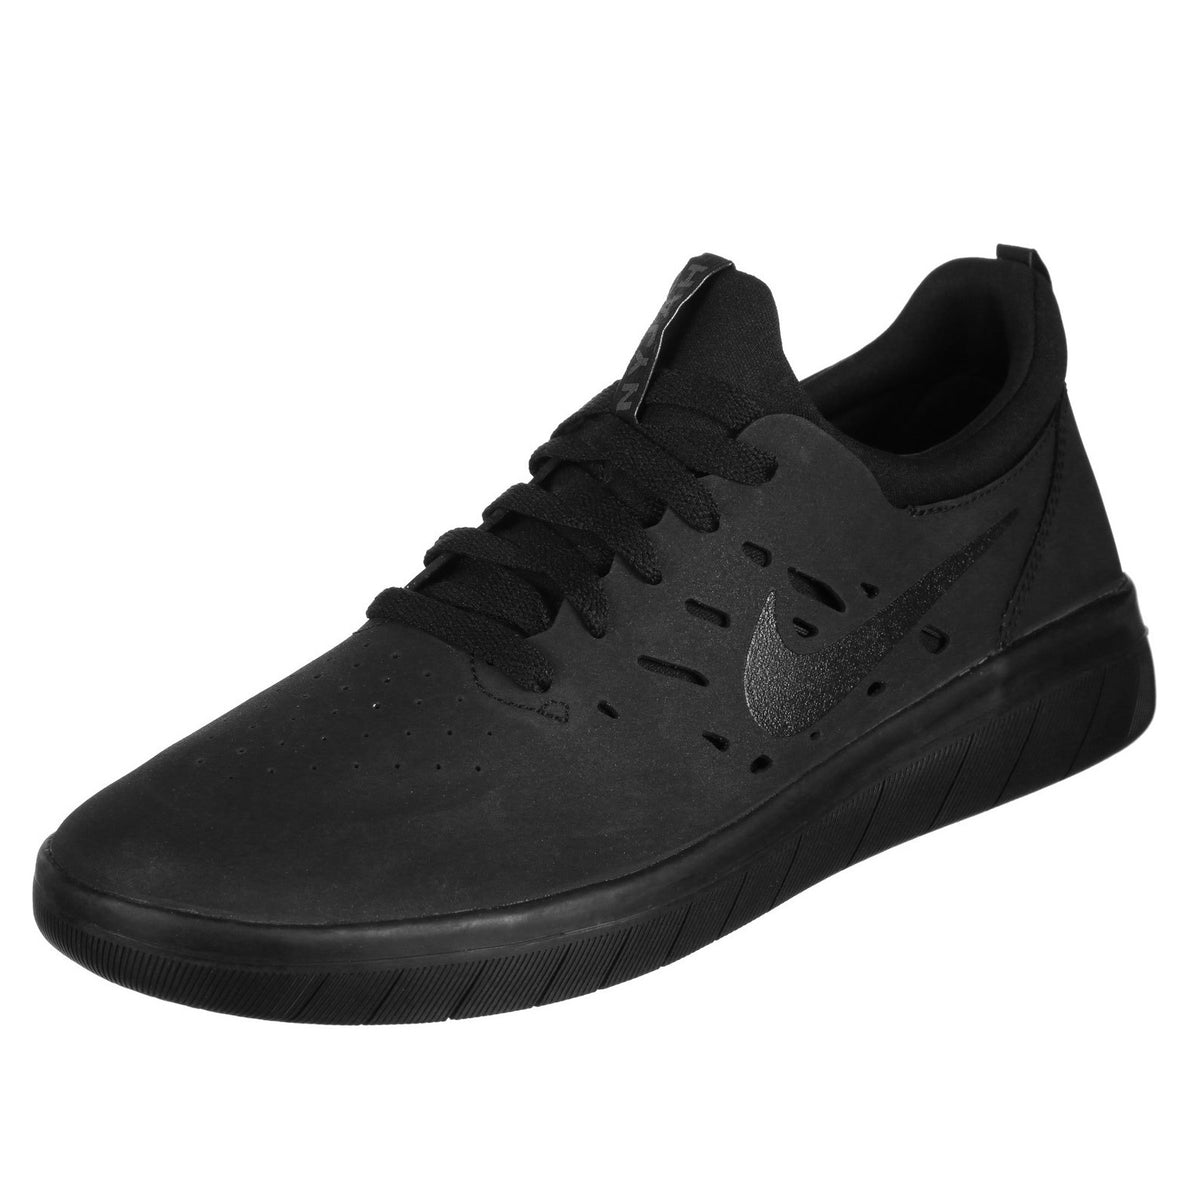 tofu eje es inutil Nike Shoes SB Nyjah Free - Black/Black-Black